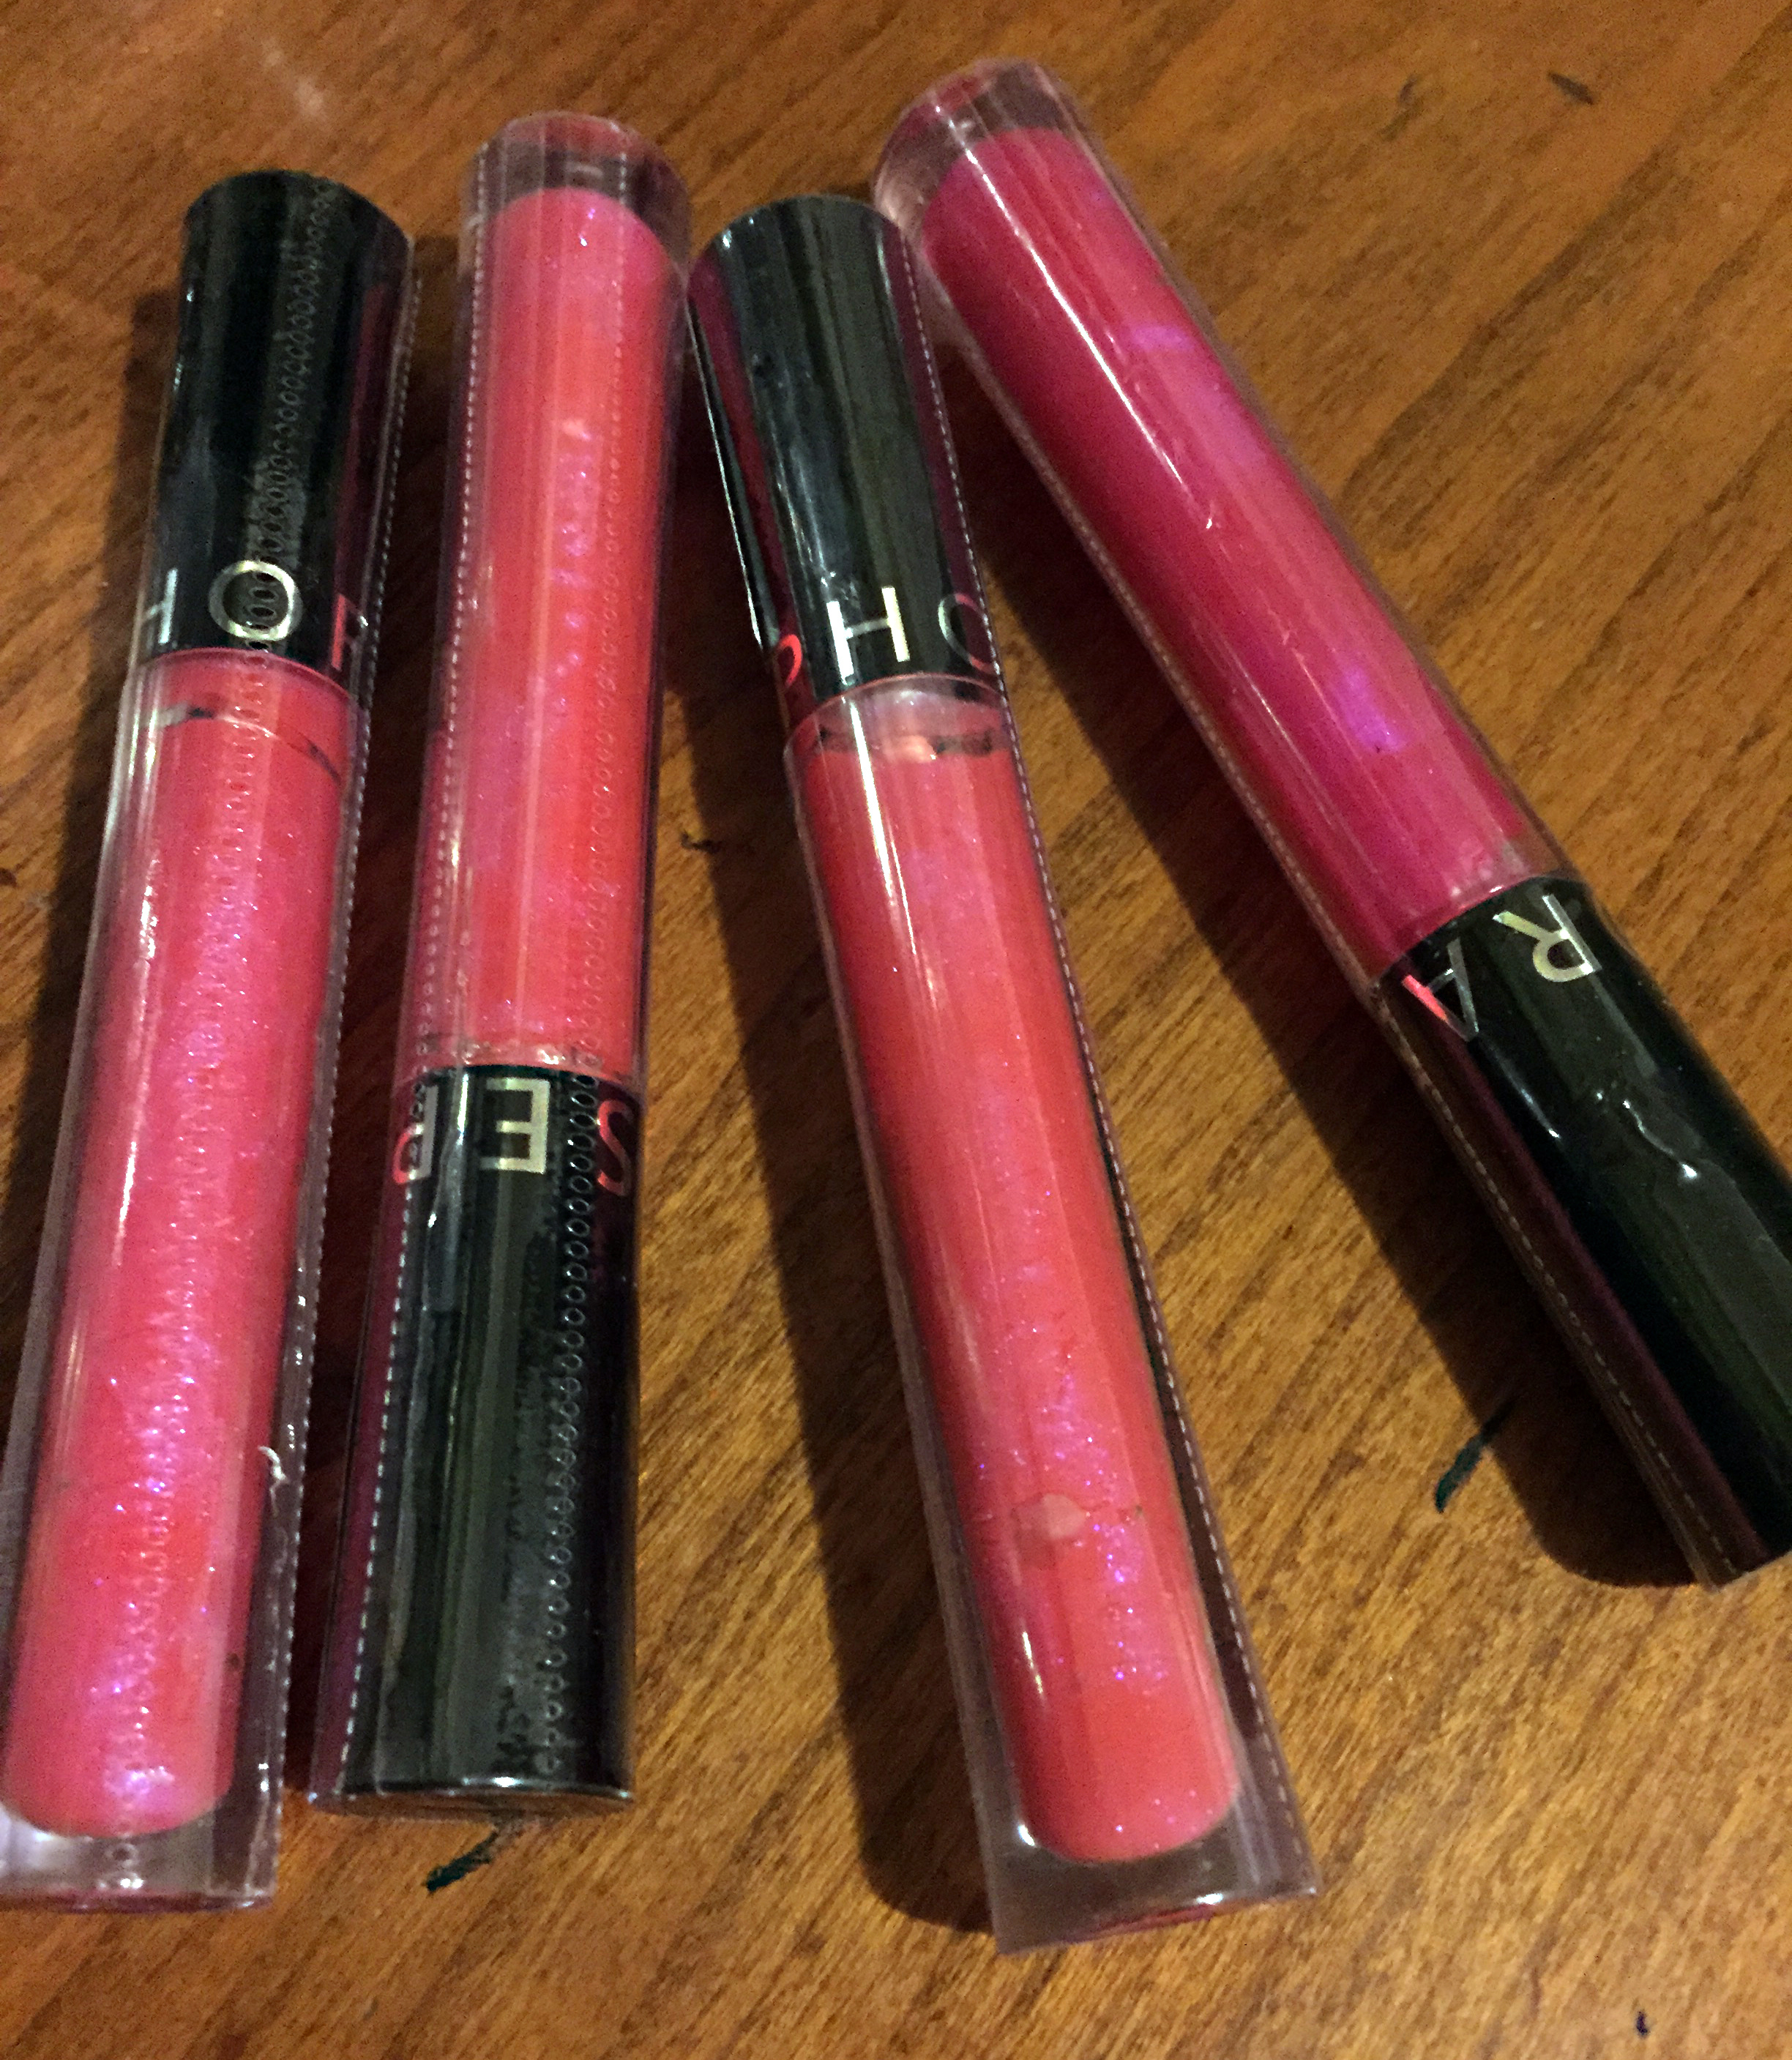 Sephora lip gloss on sale